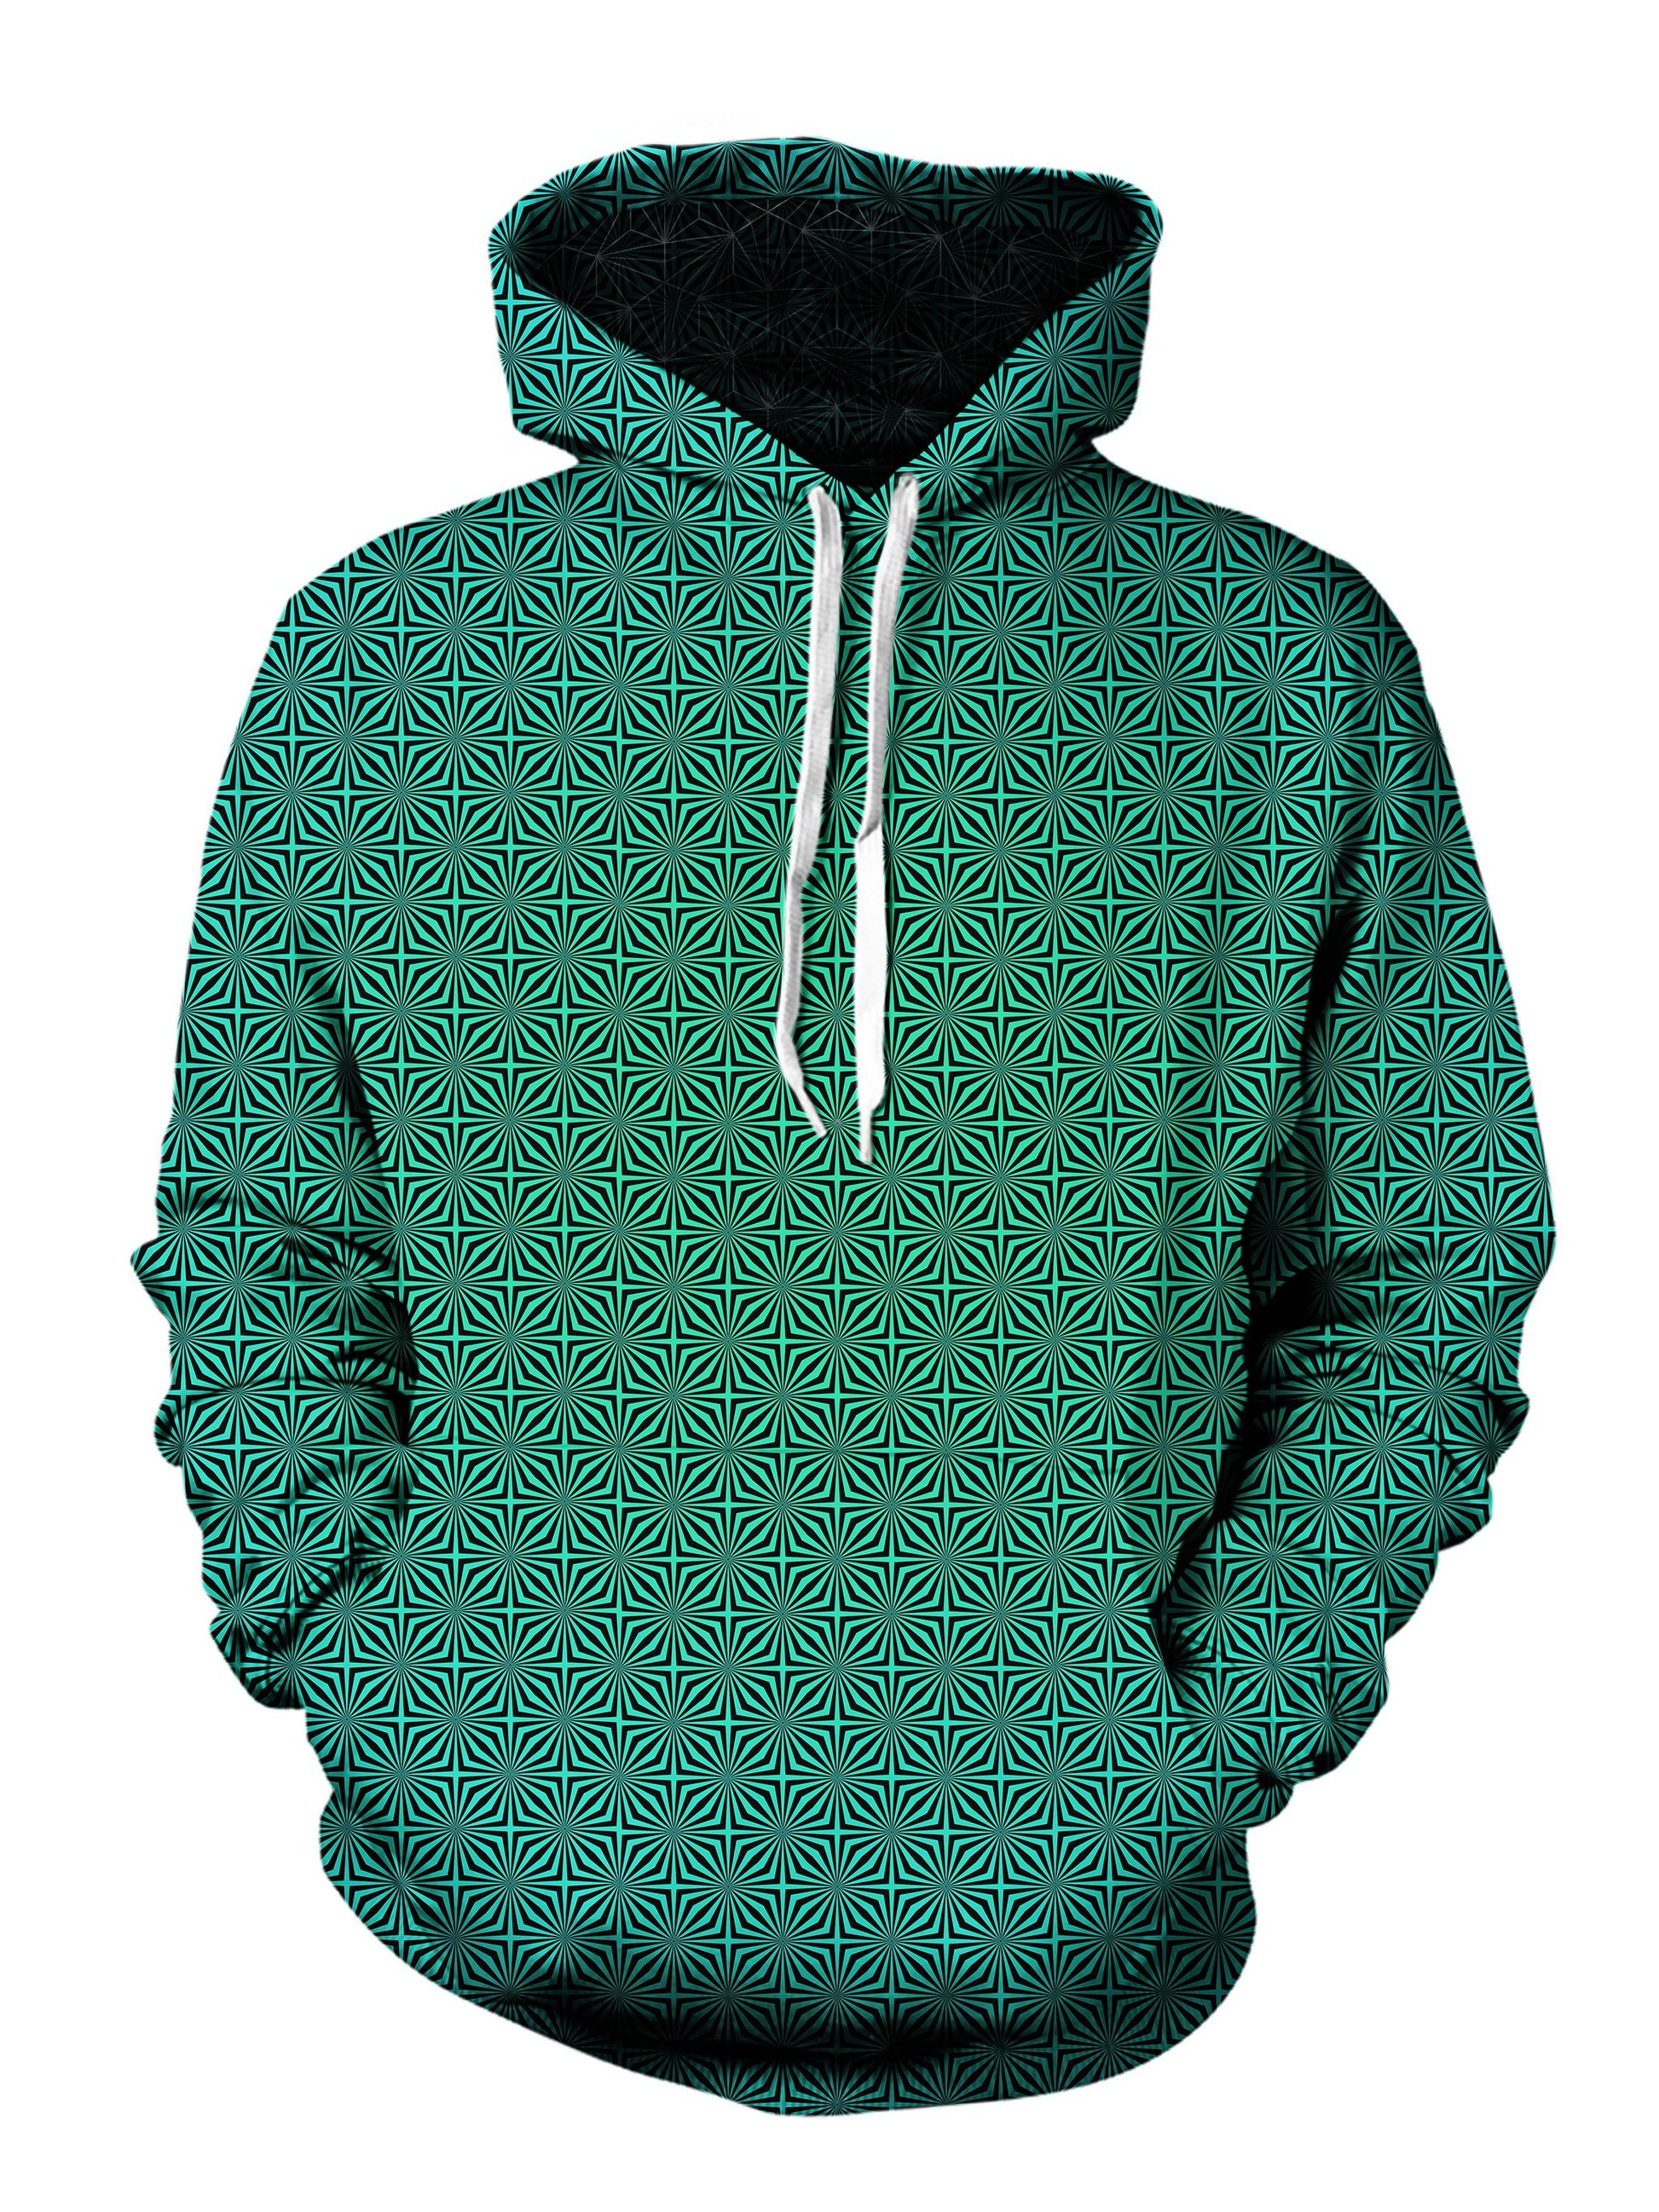 trippy green fade pattern hoodie - festival pullover